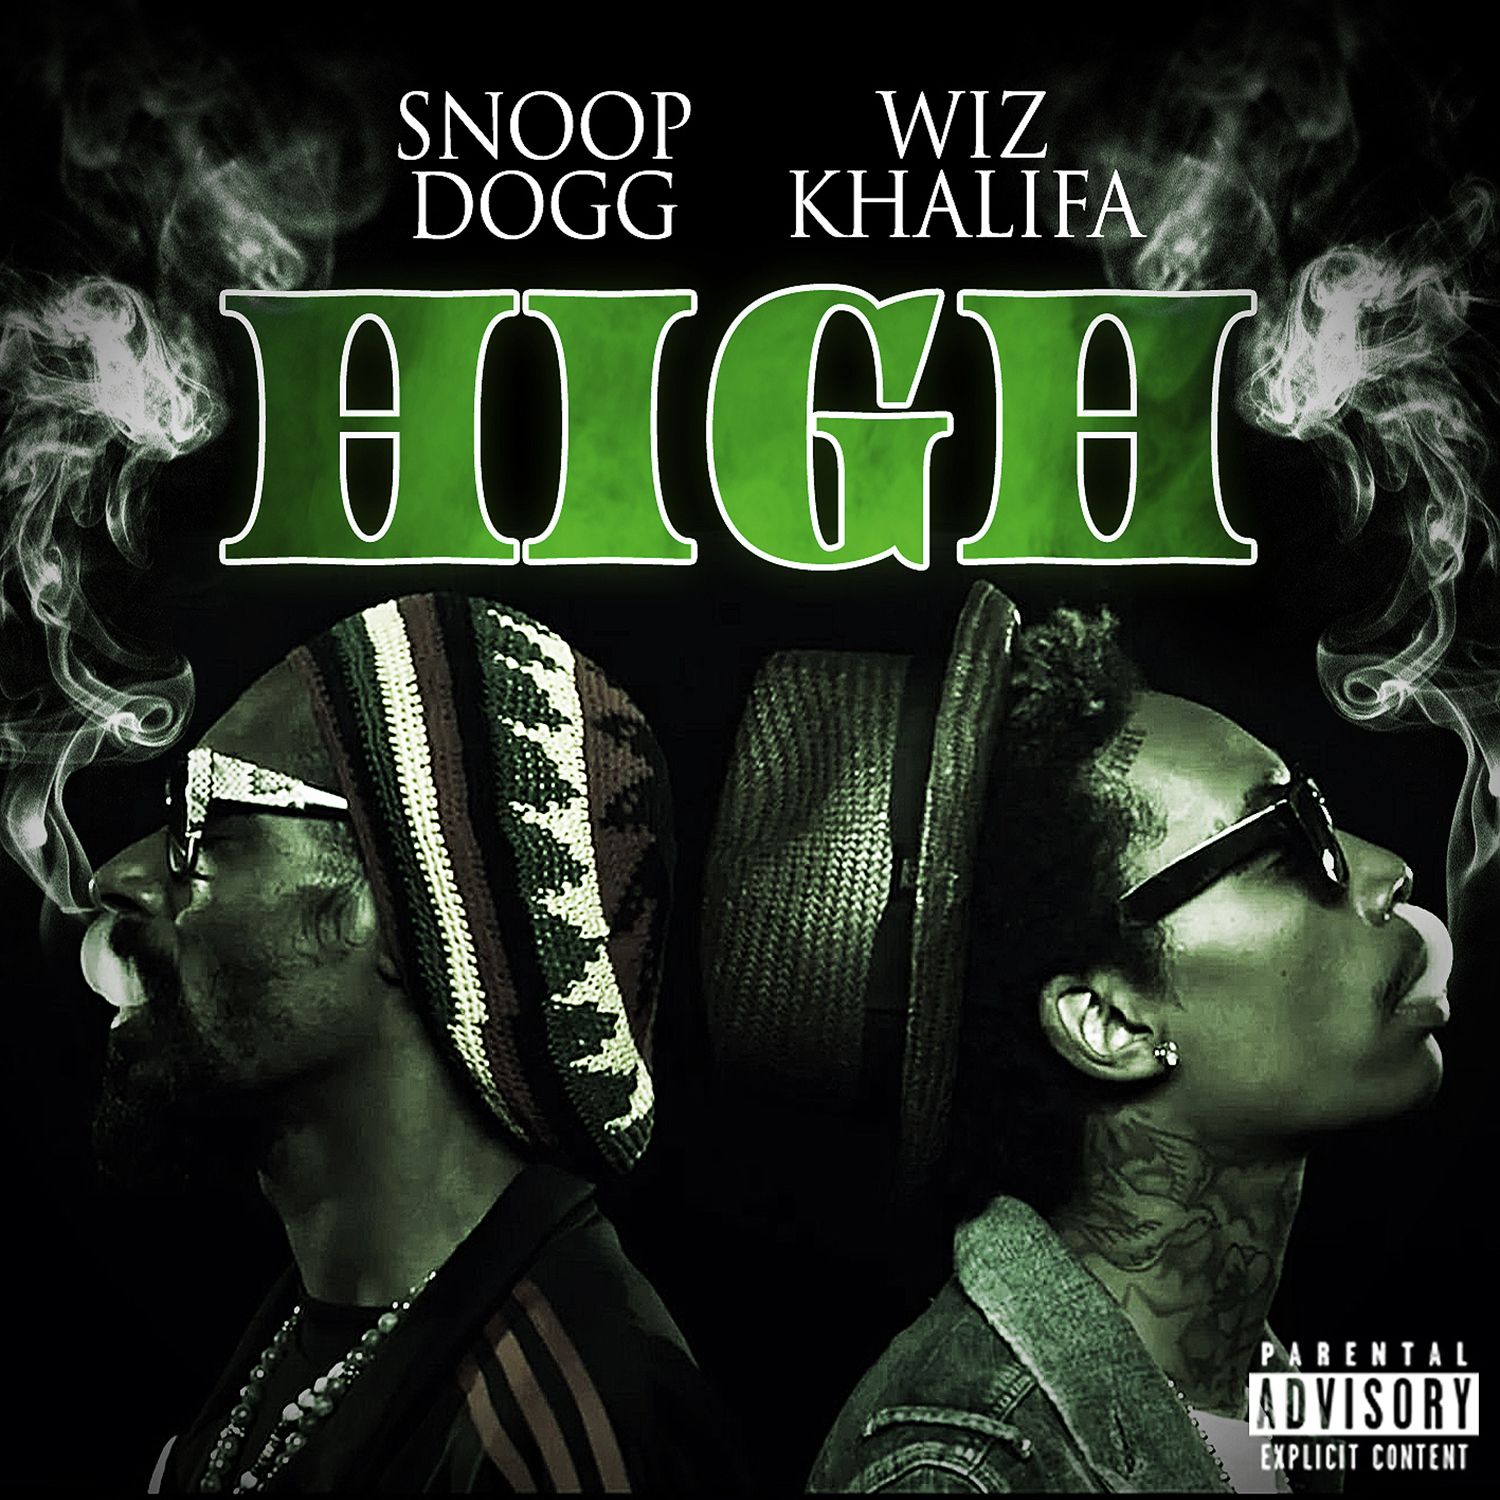 Snoop Dogg & Wiz Khalifa - Call Again ft. Problem & Juicy J [Новый Рэп]